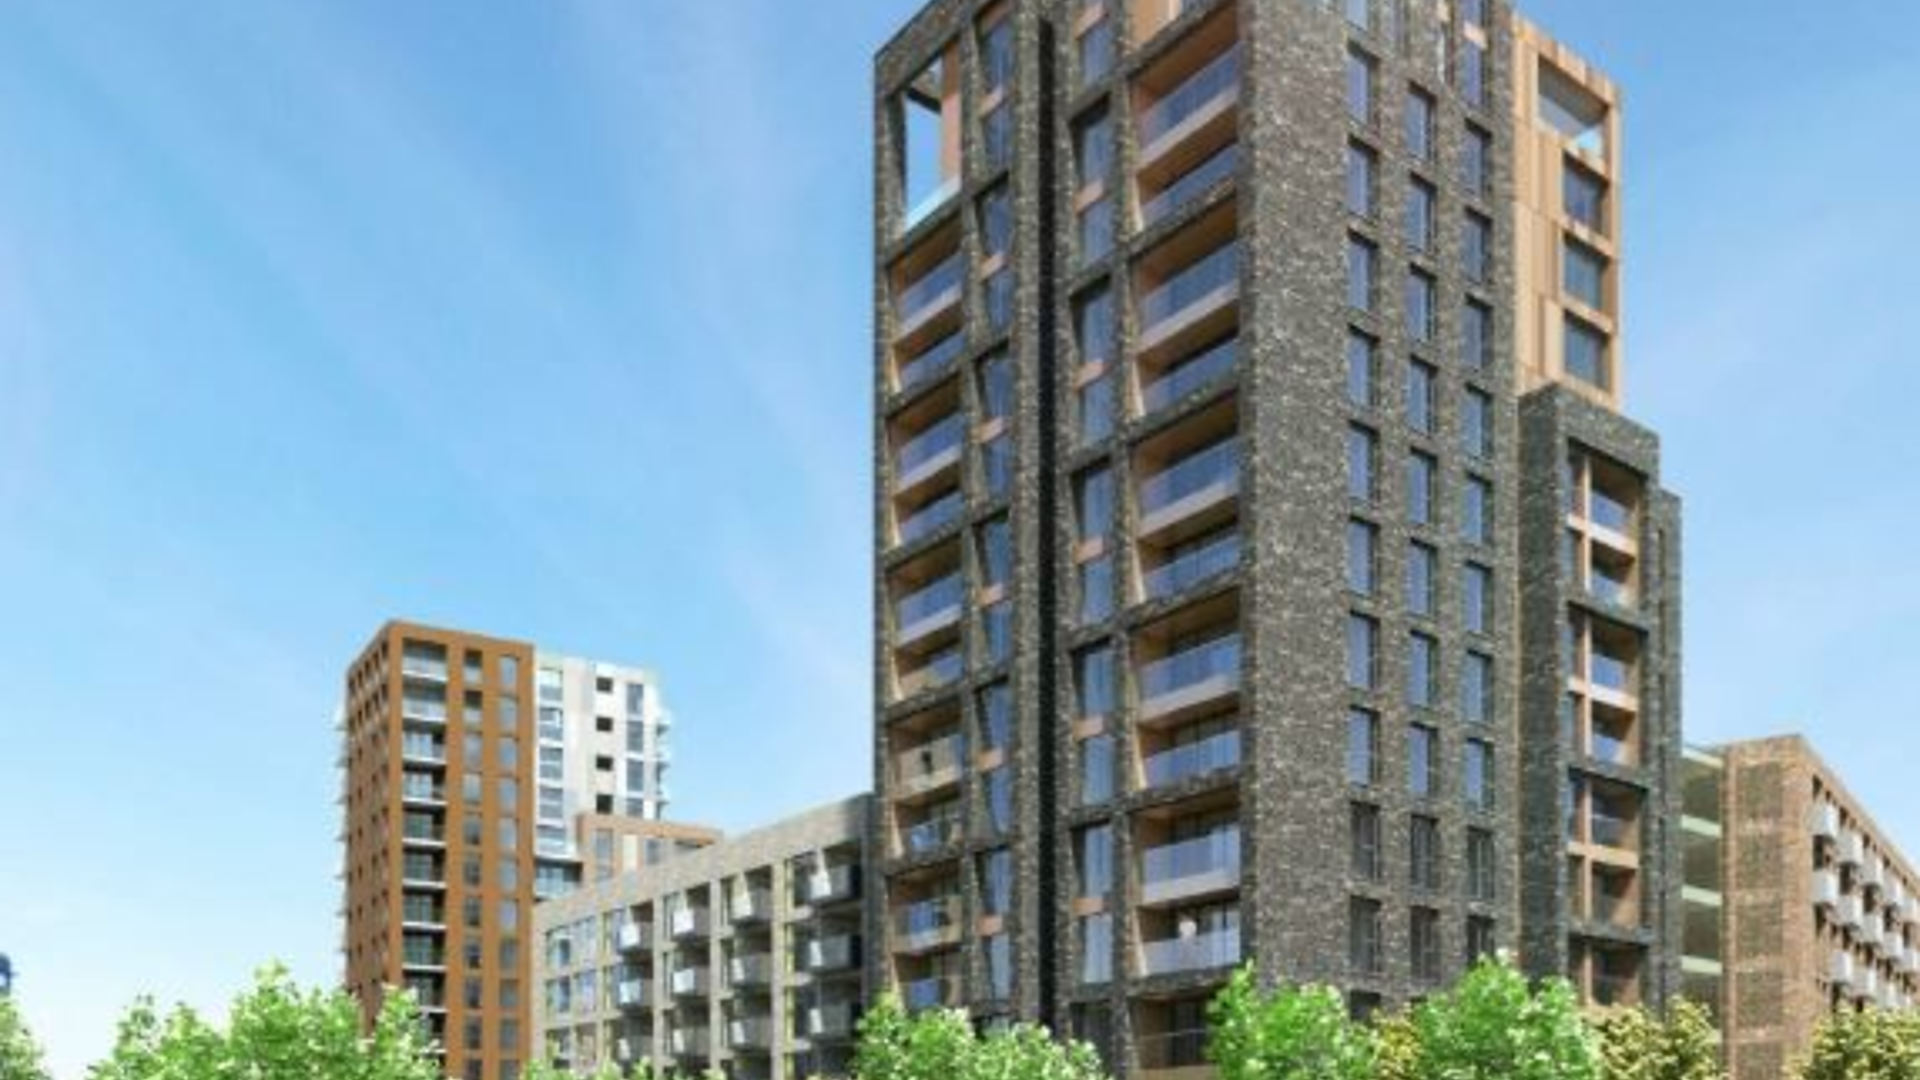 Apartments to Rent by JLL at The Horizon, Lewisham, SE10, development panoramic